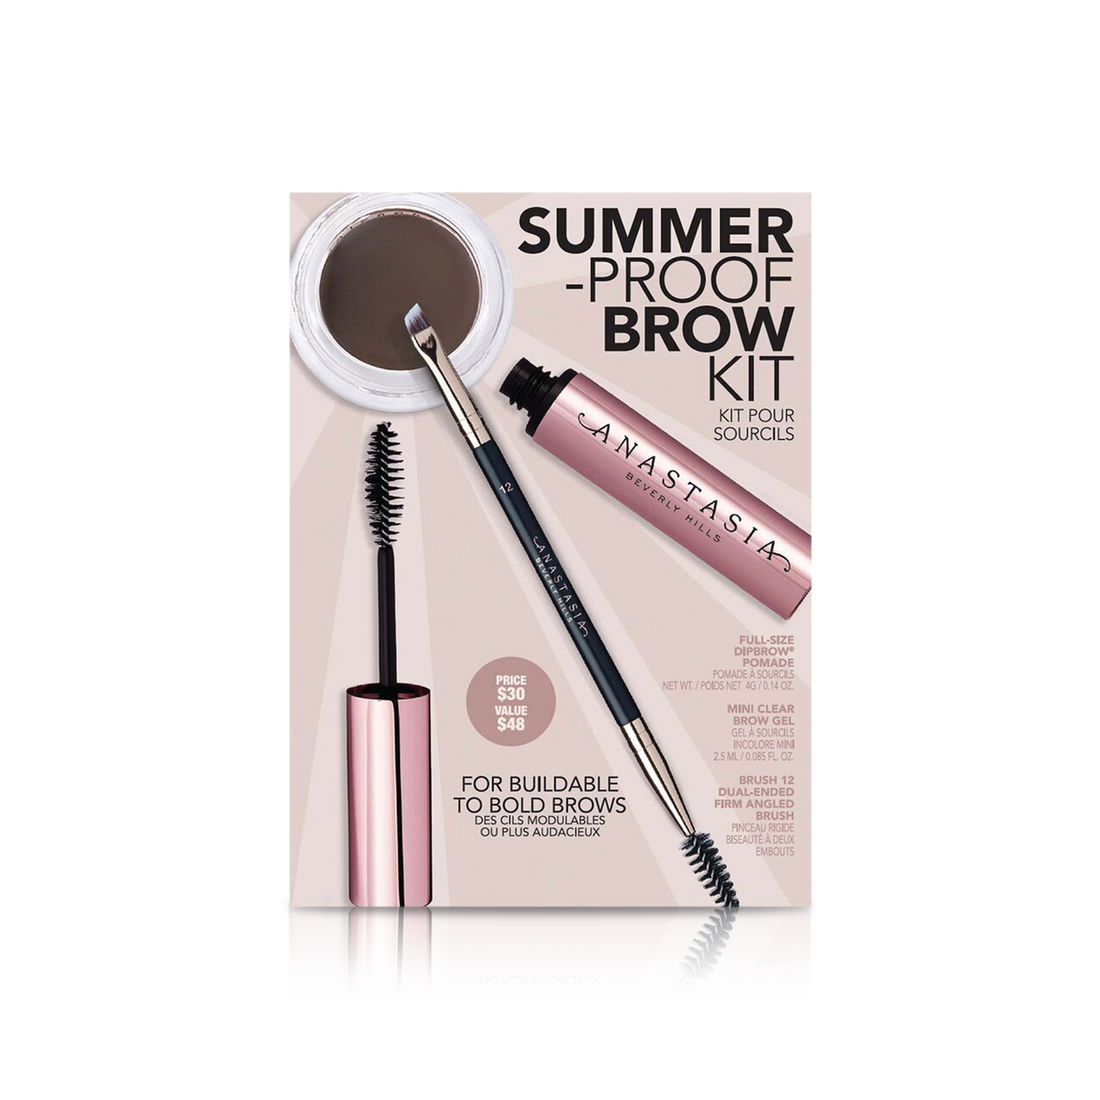 Summer-Proof Brow Kit